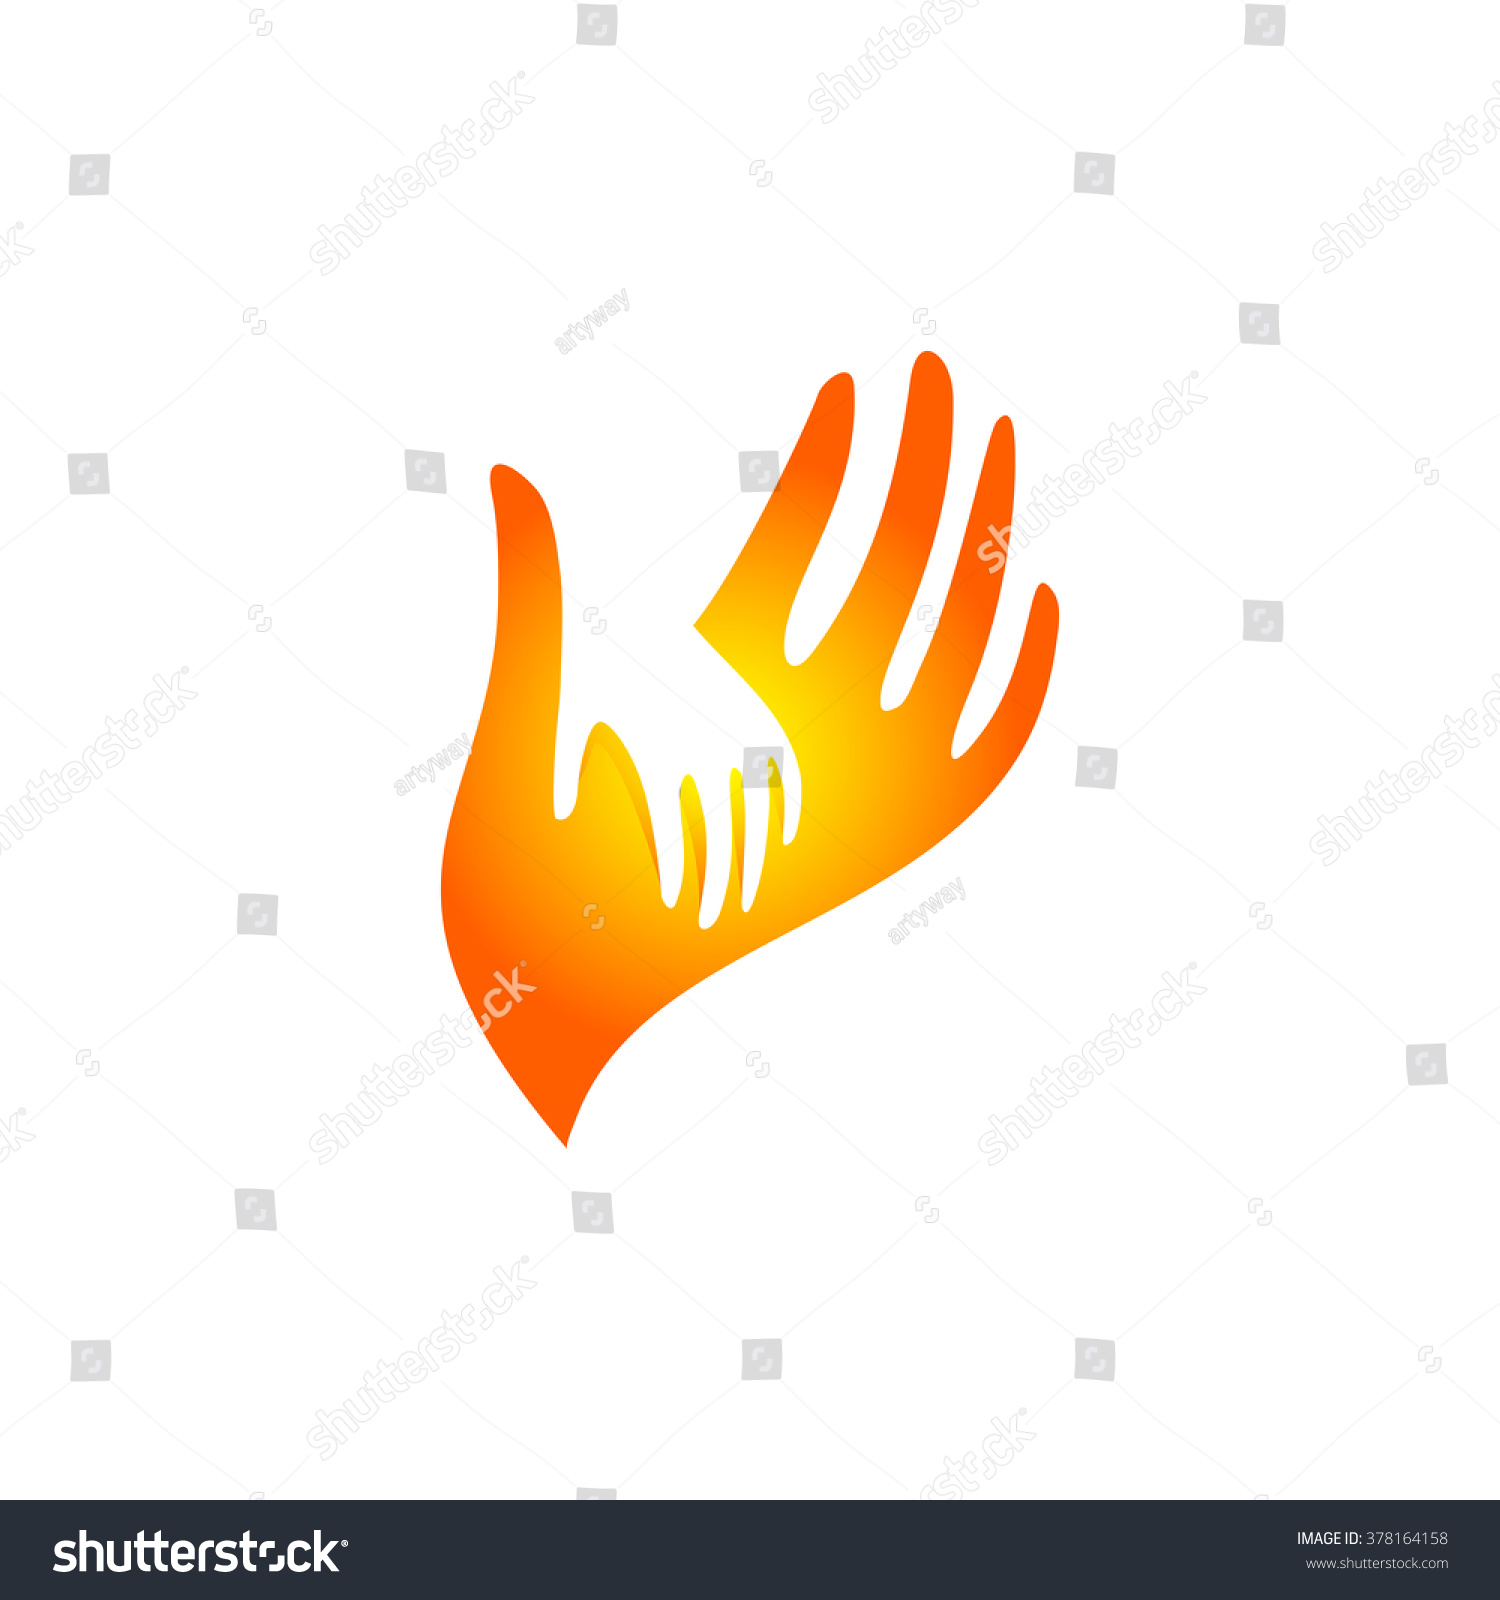 Download Isolated Orange White Vector Hands Logo Stock Vector ...